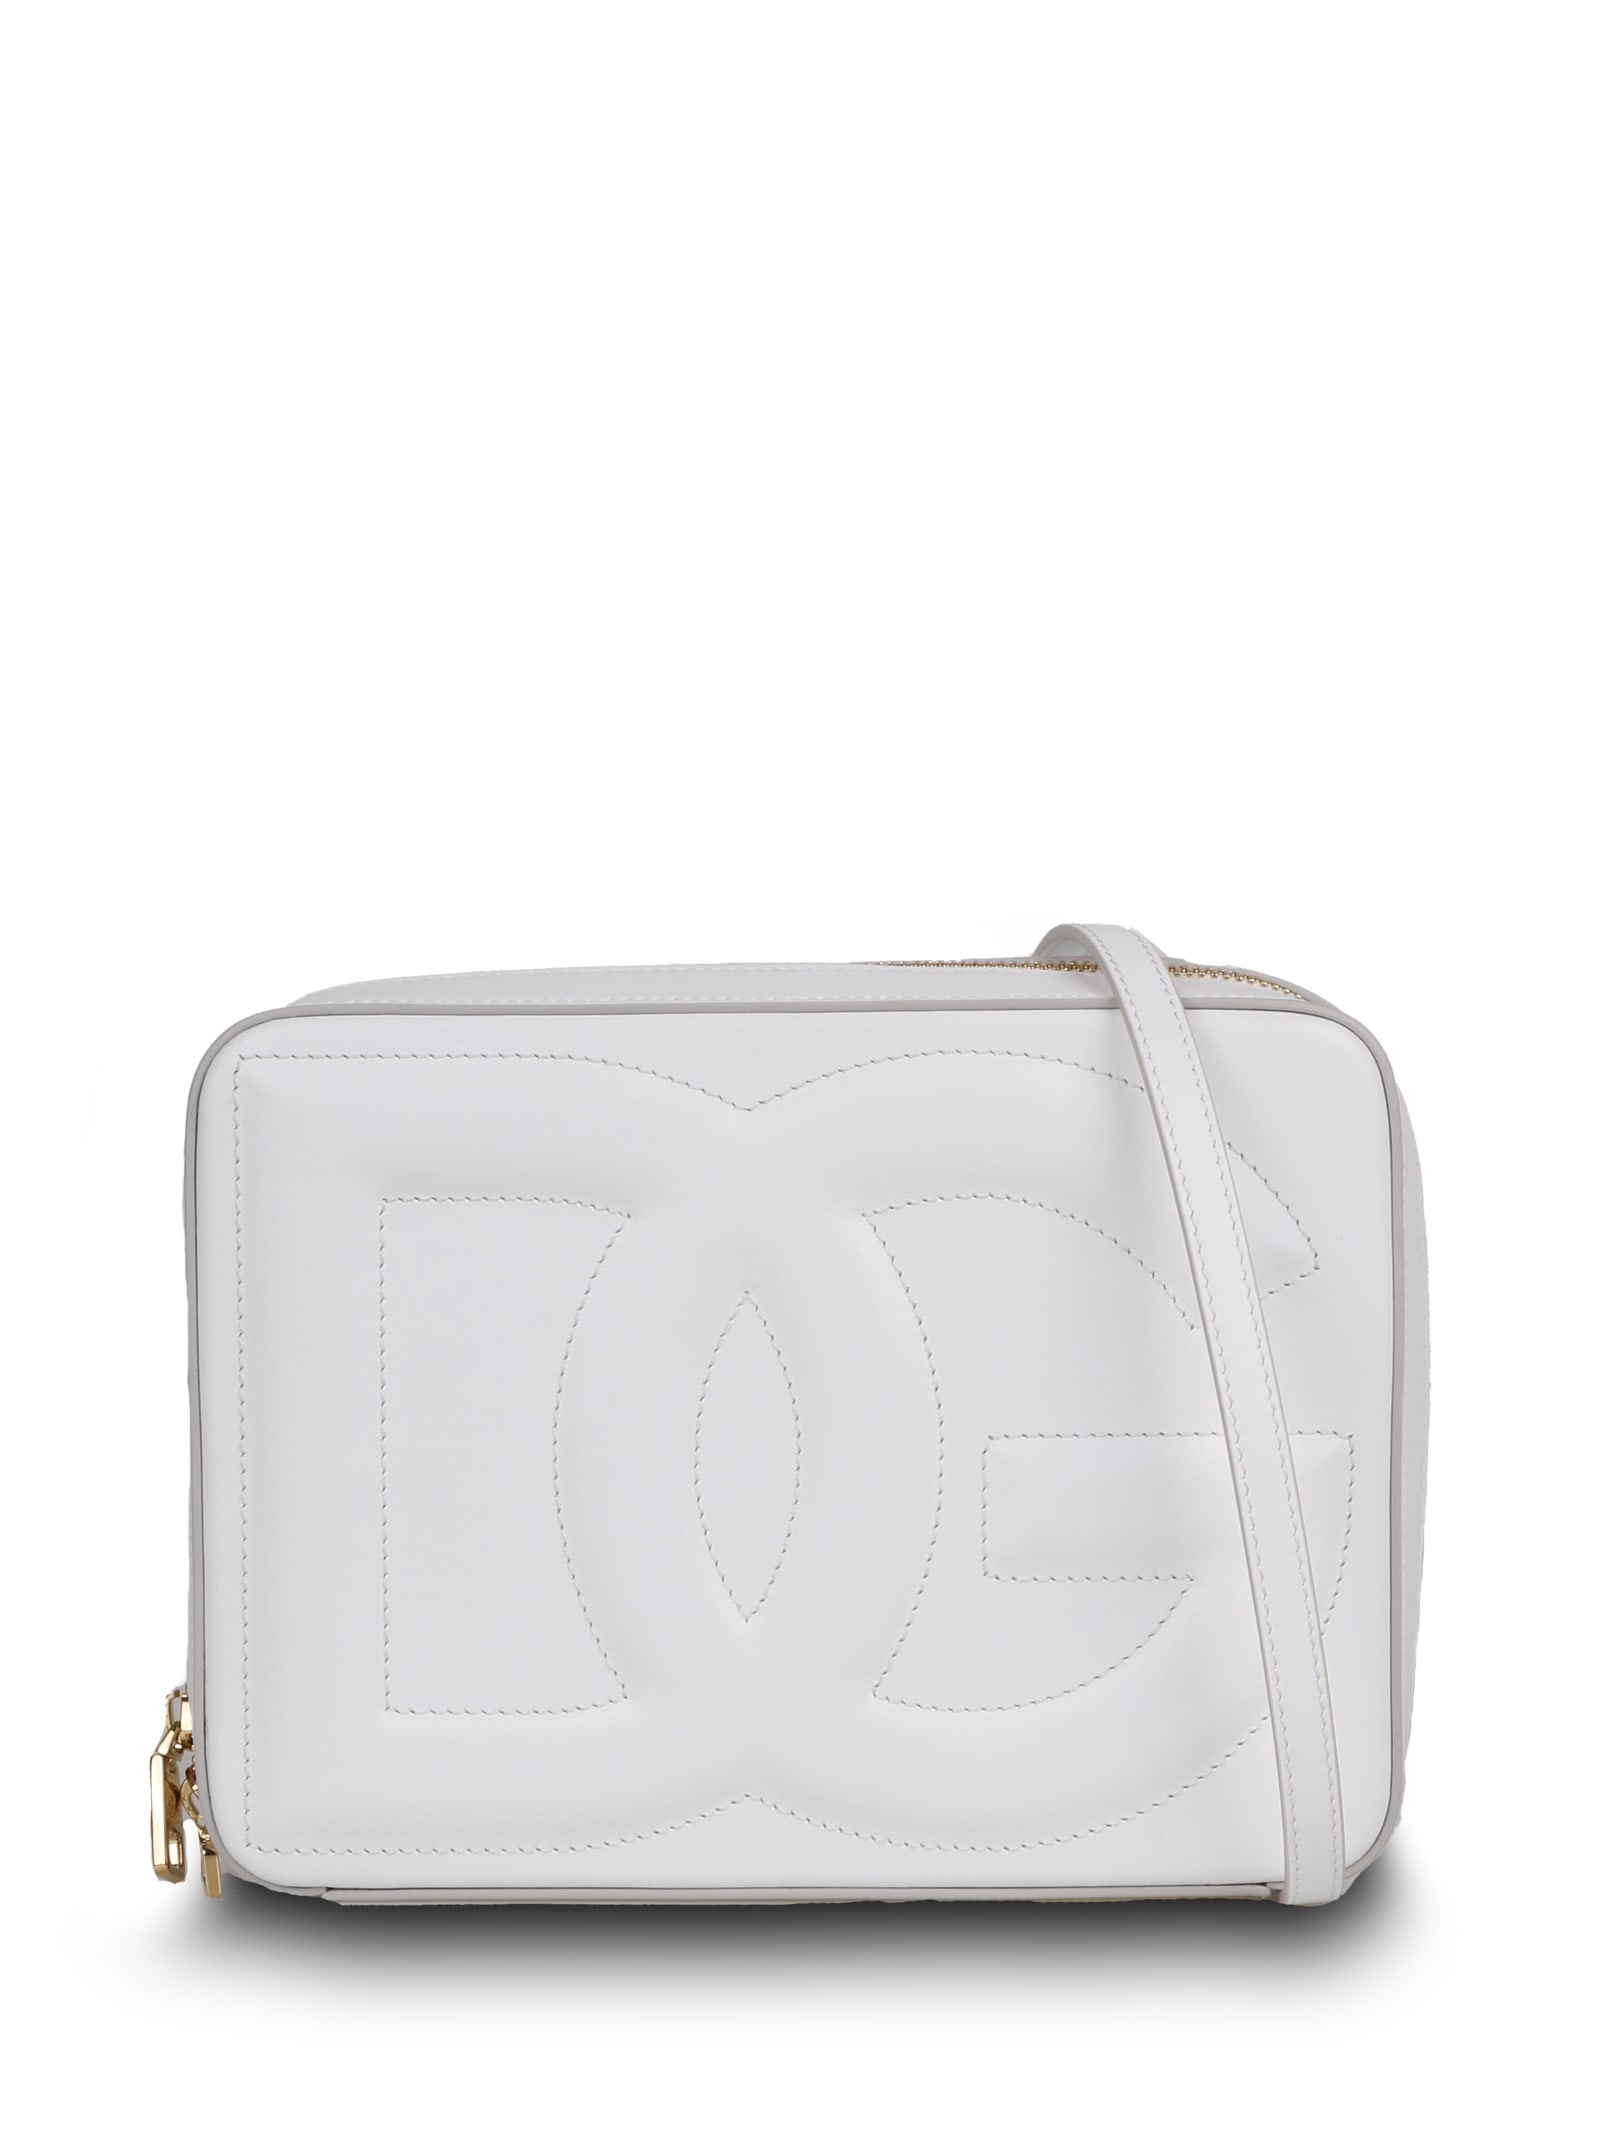 Dolce & Gabbana dg Logo Medium Camera Bag